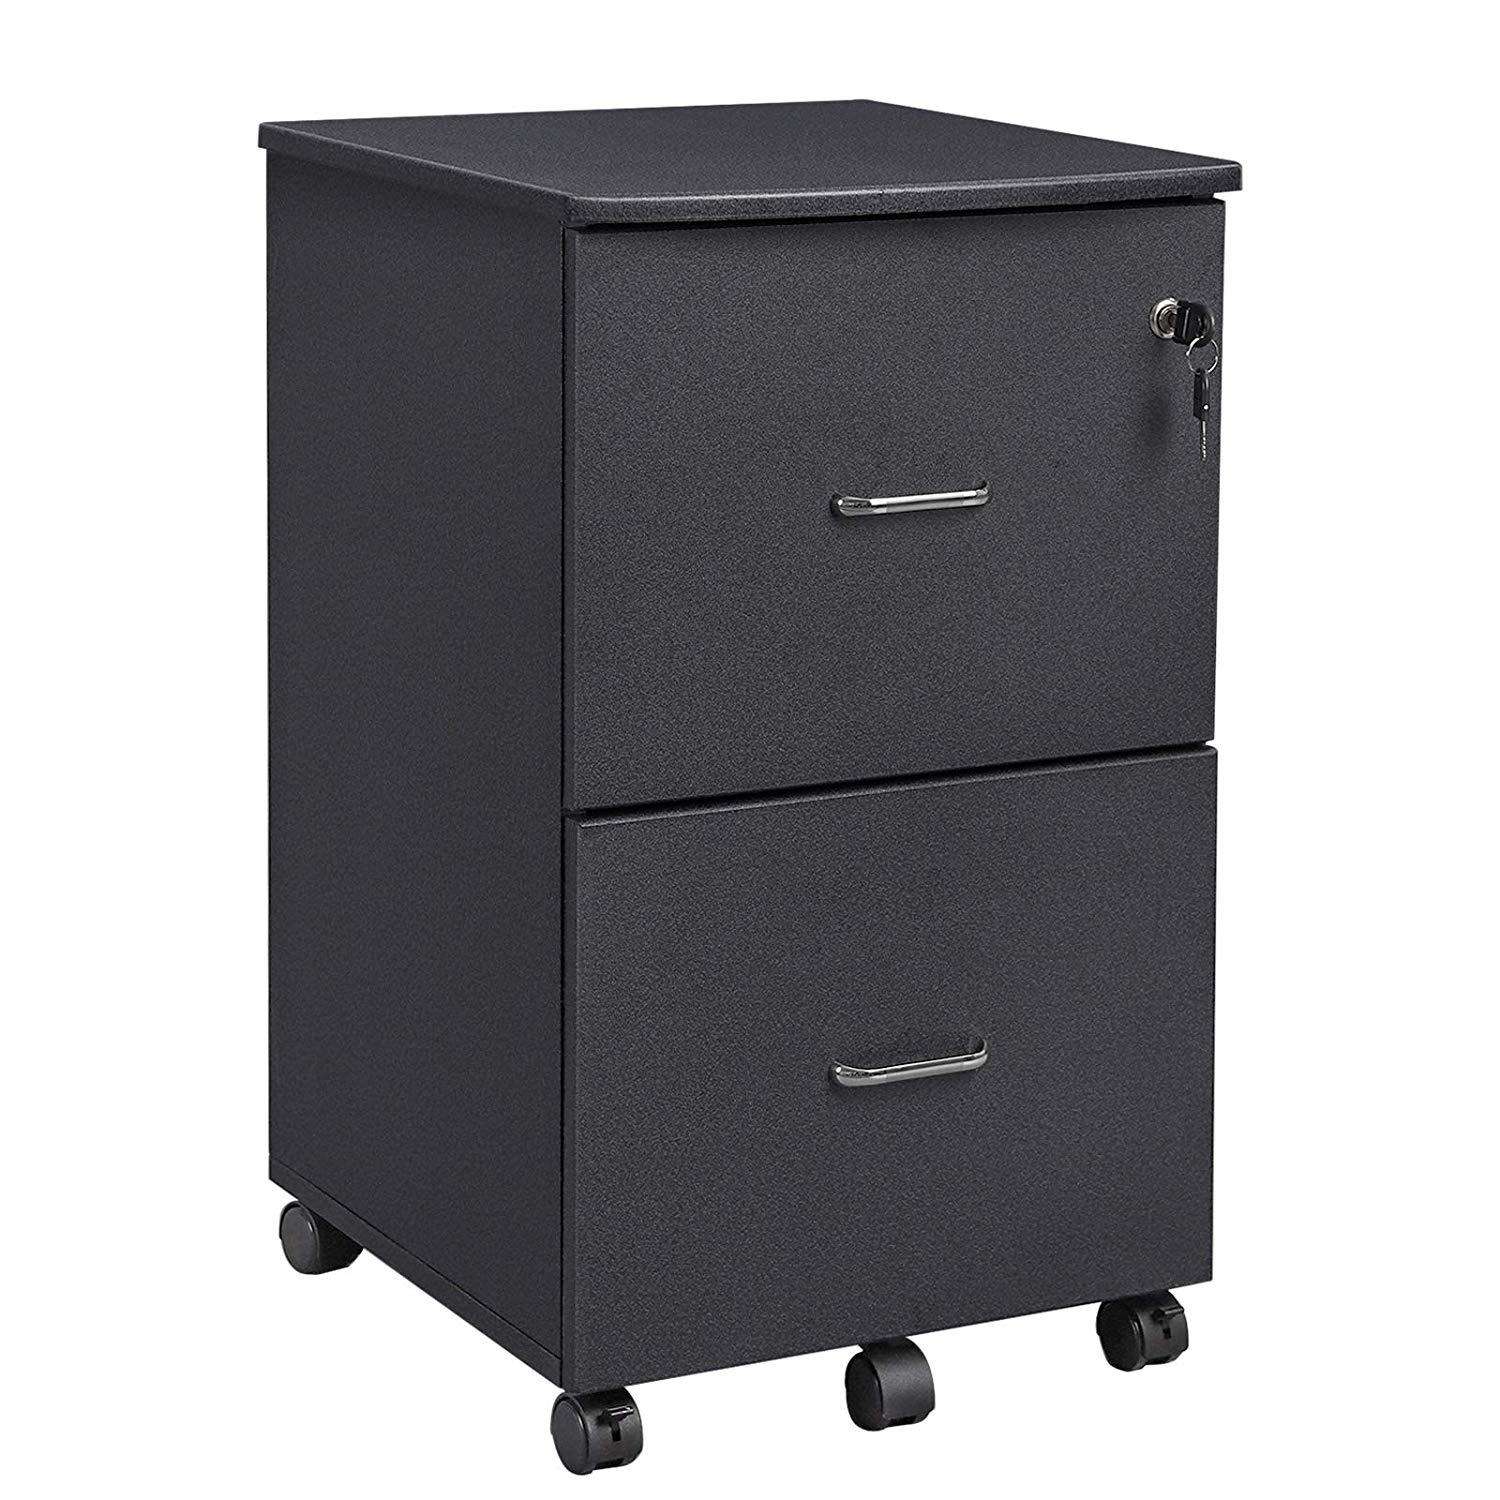 Nancy's Drawer Unit Black - Steel Locker on Wheels - Office Cabinet - Rolling Container - 71 x 51 x 16 cm